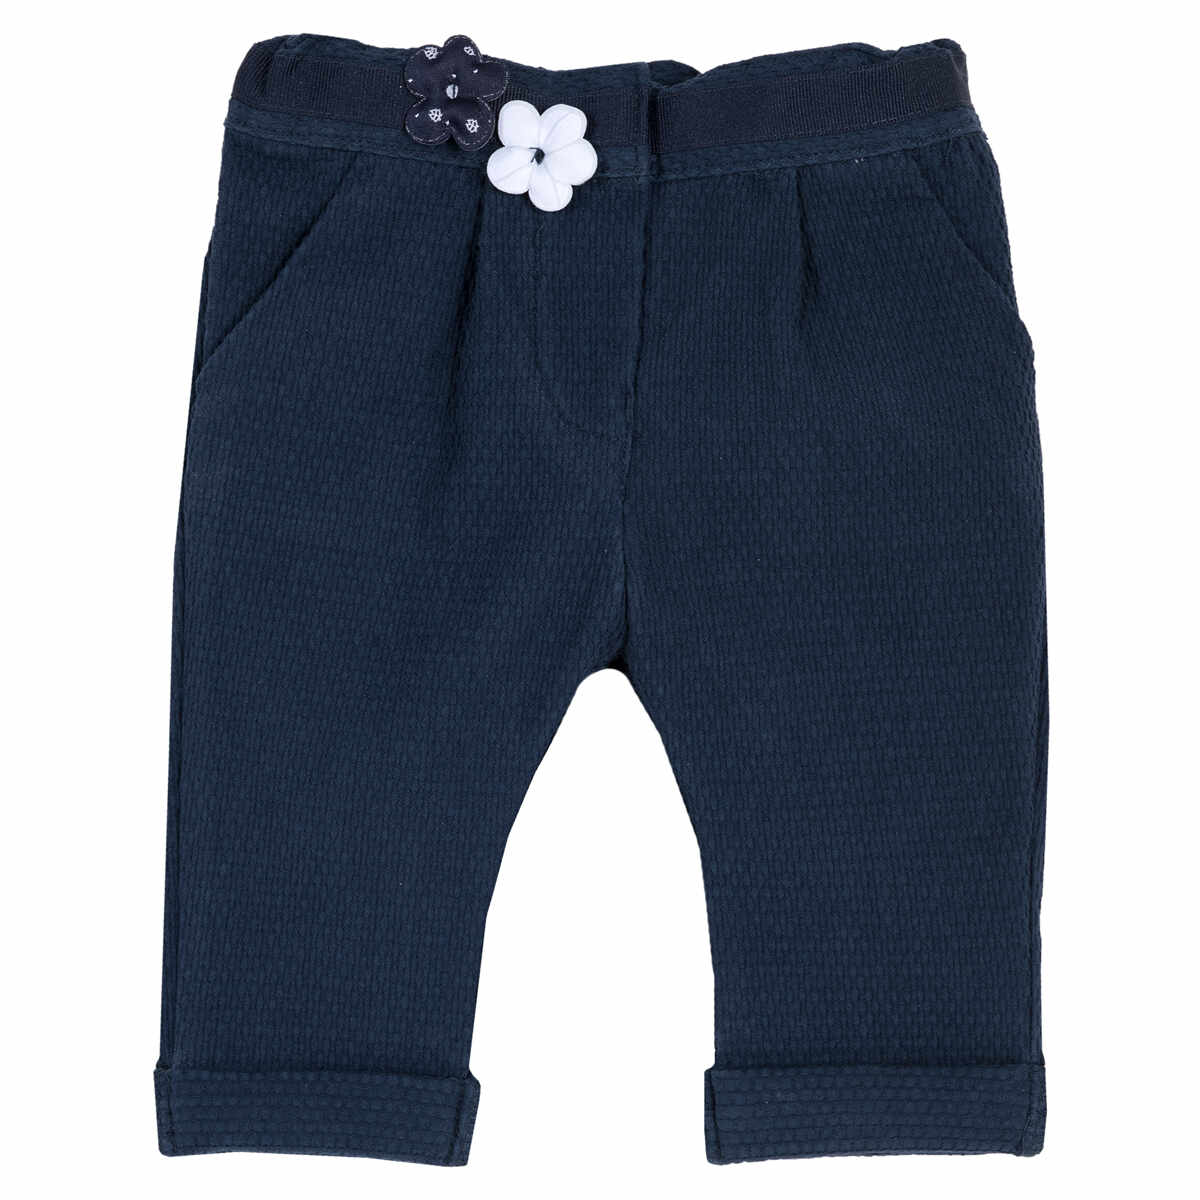 Pantalon lung copii Chicco, albastru inchis, 24918